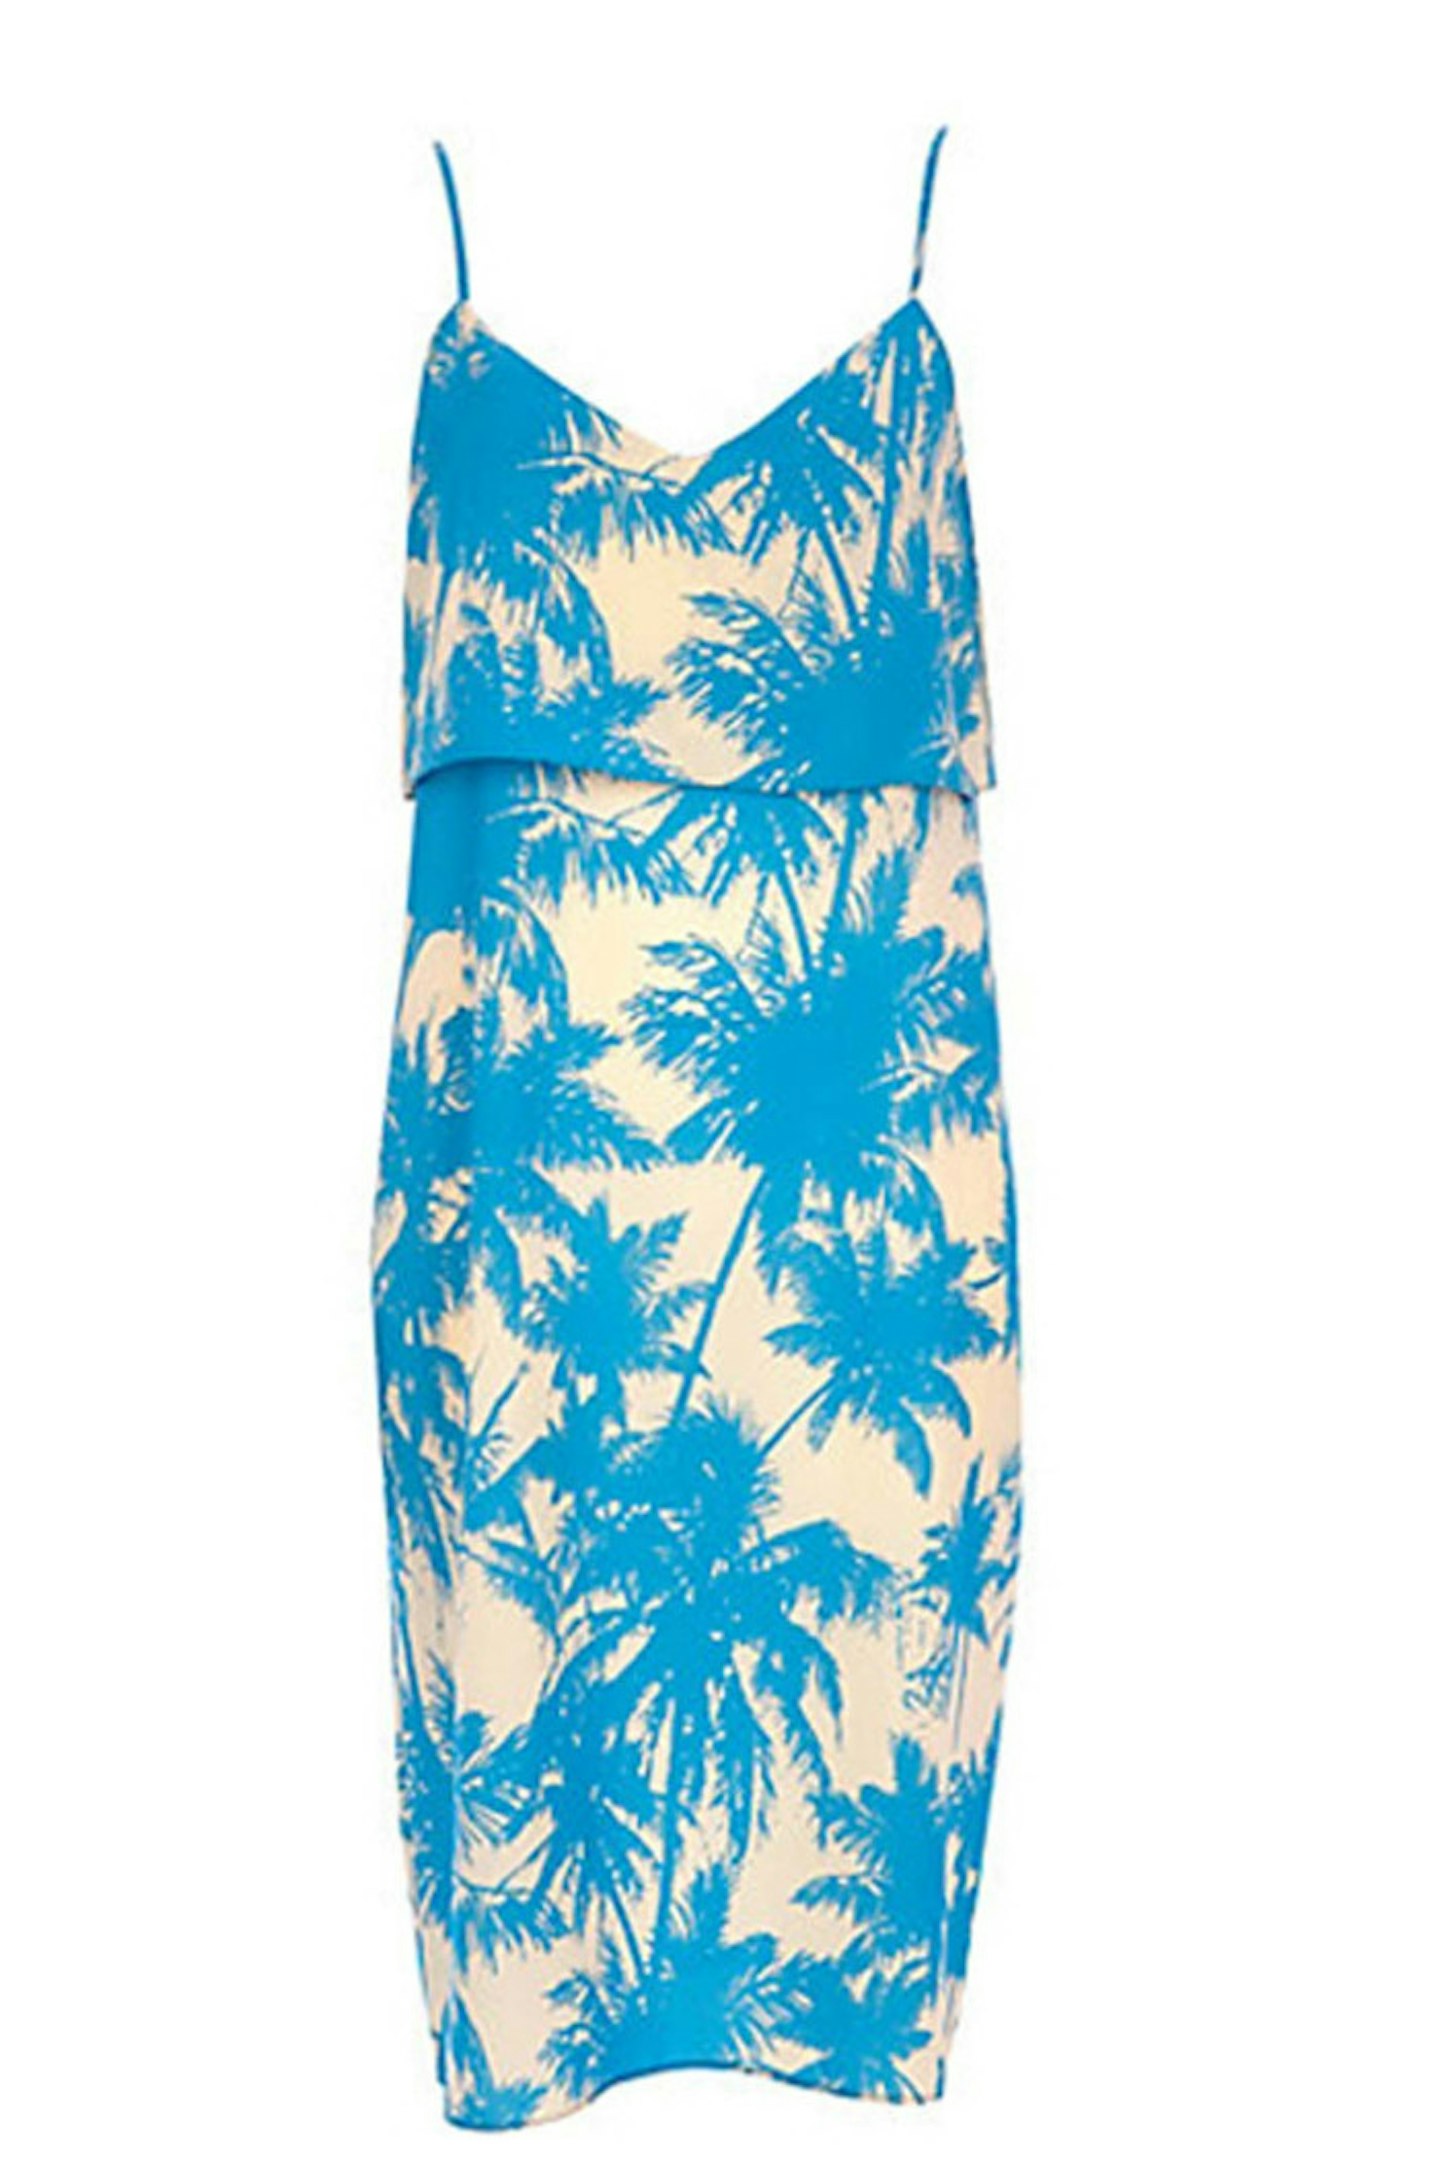 Dress, £35, River Island